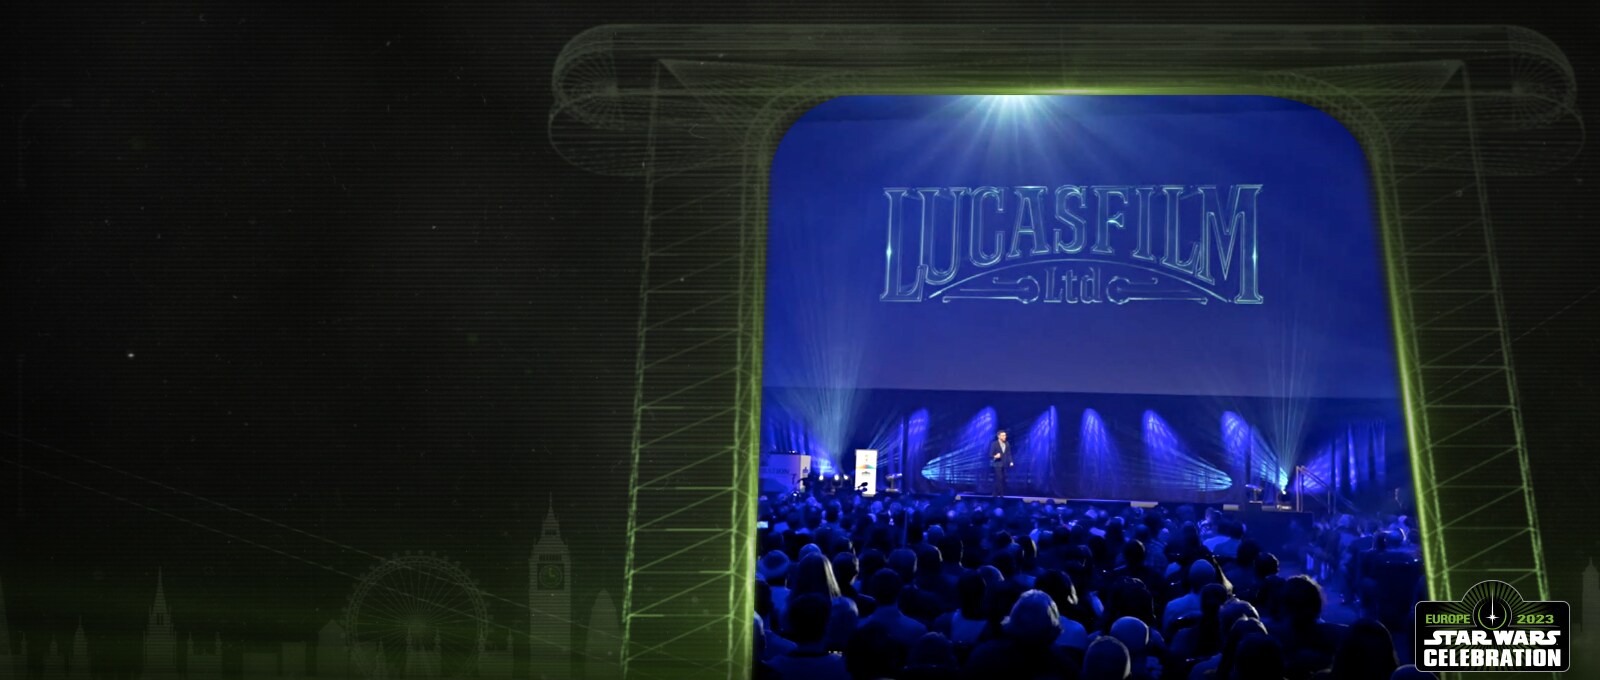 SWCE23 Watch the Lucasfilm Studio Showcase Recap